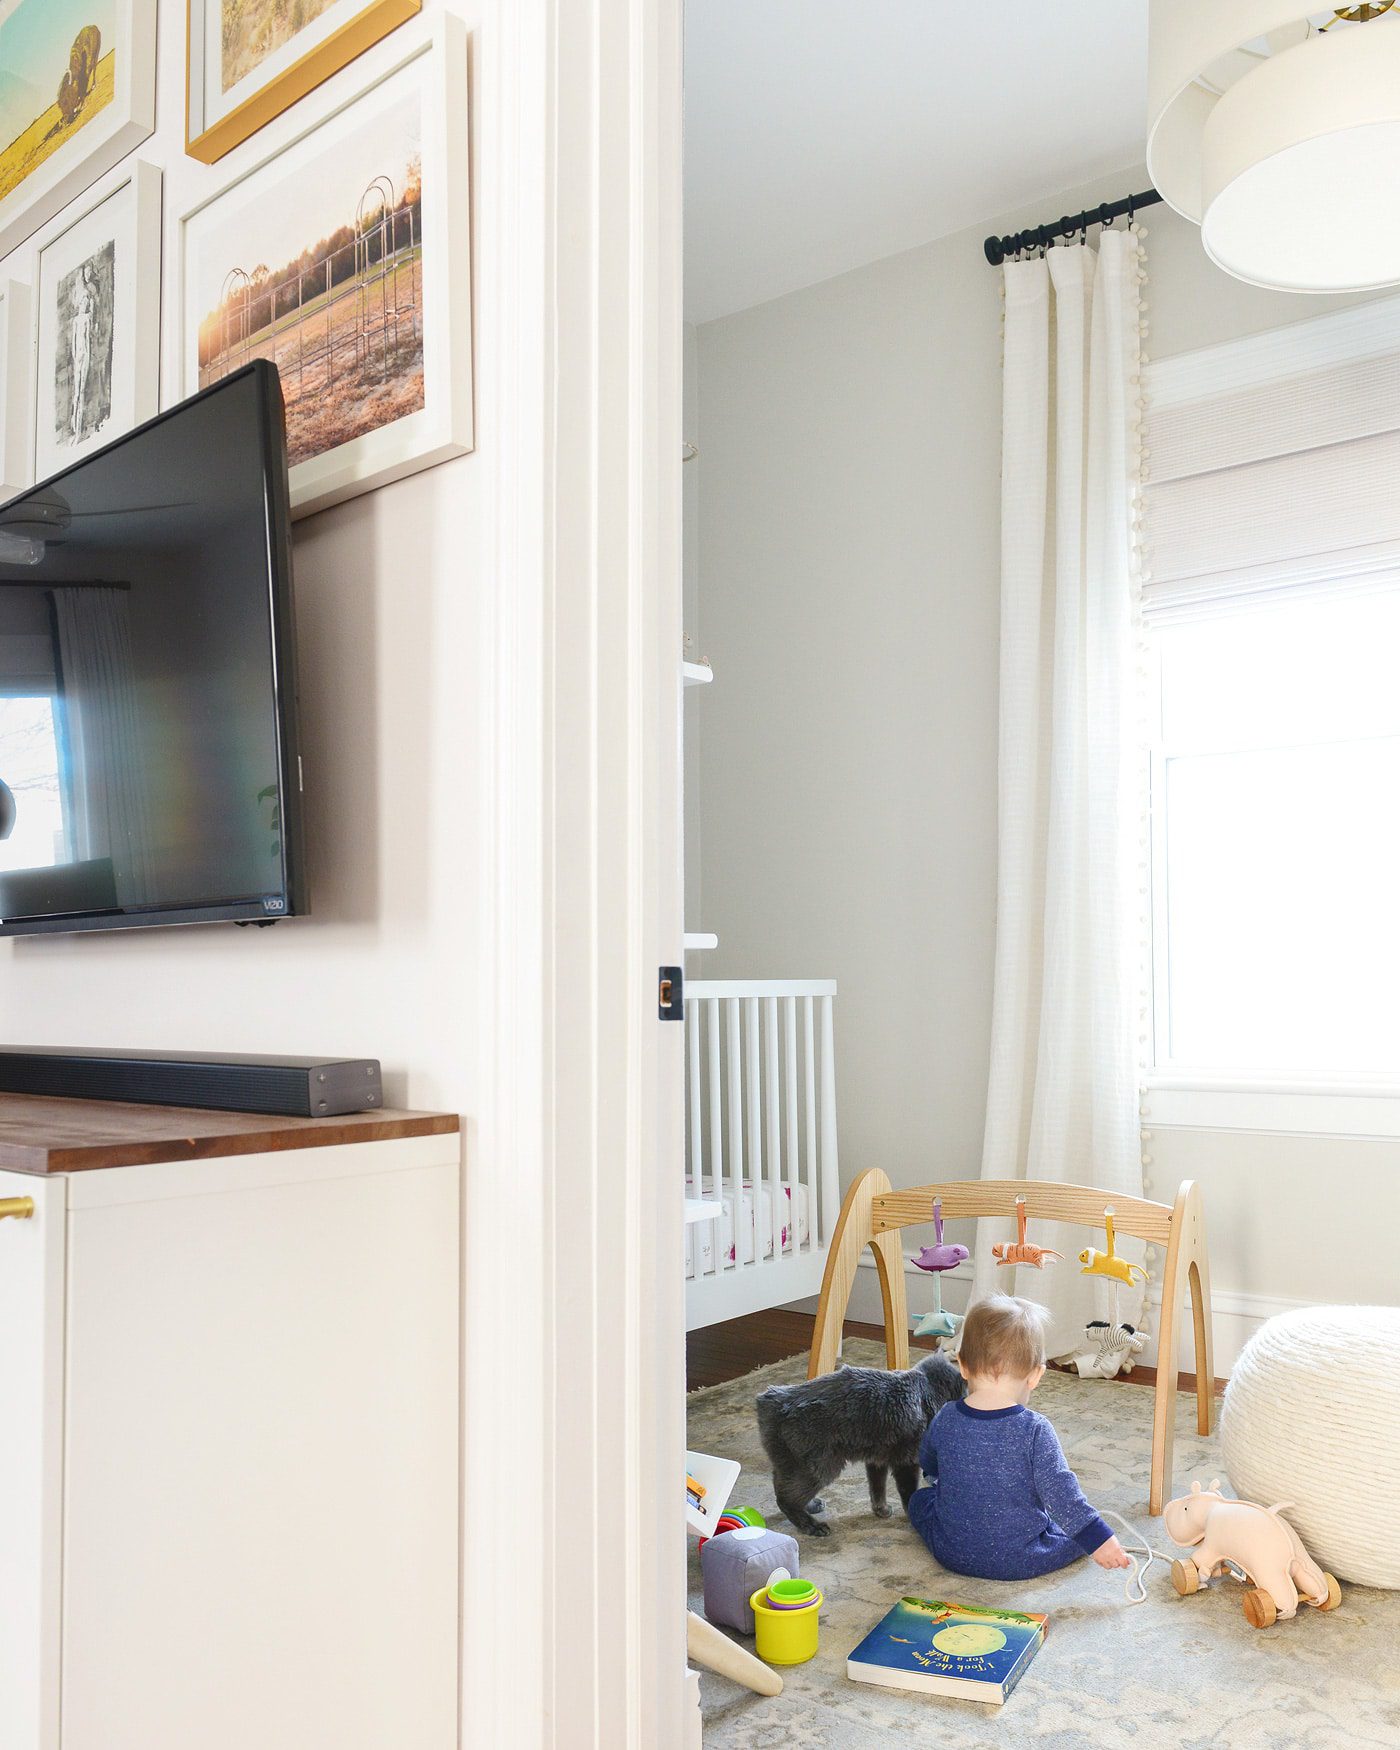 PURPLE SoundBreak XP Retrofit drywall improves sound between rooms | via Yellow Brick Home